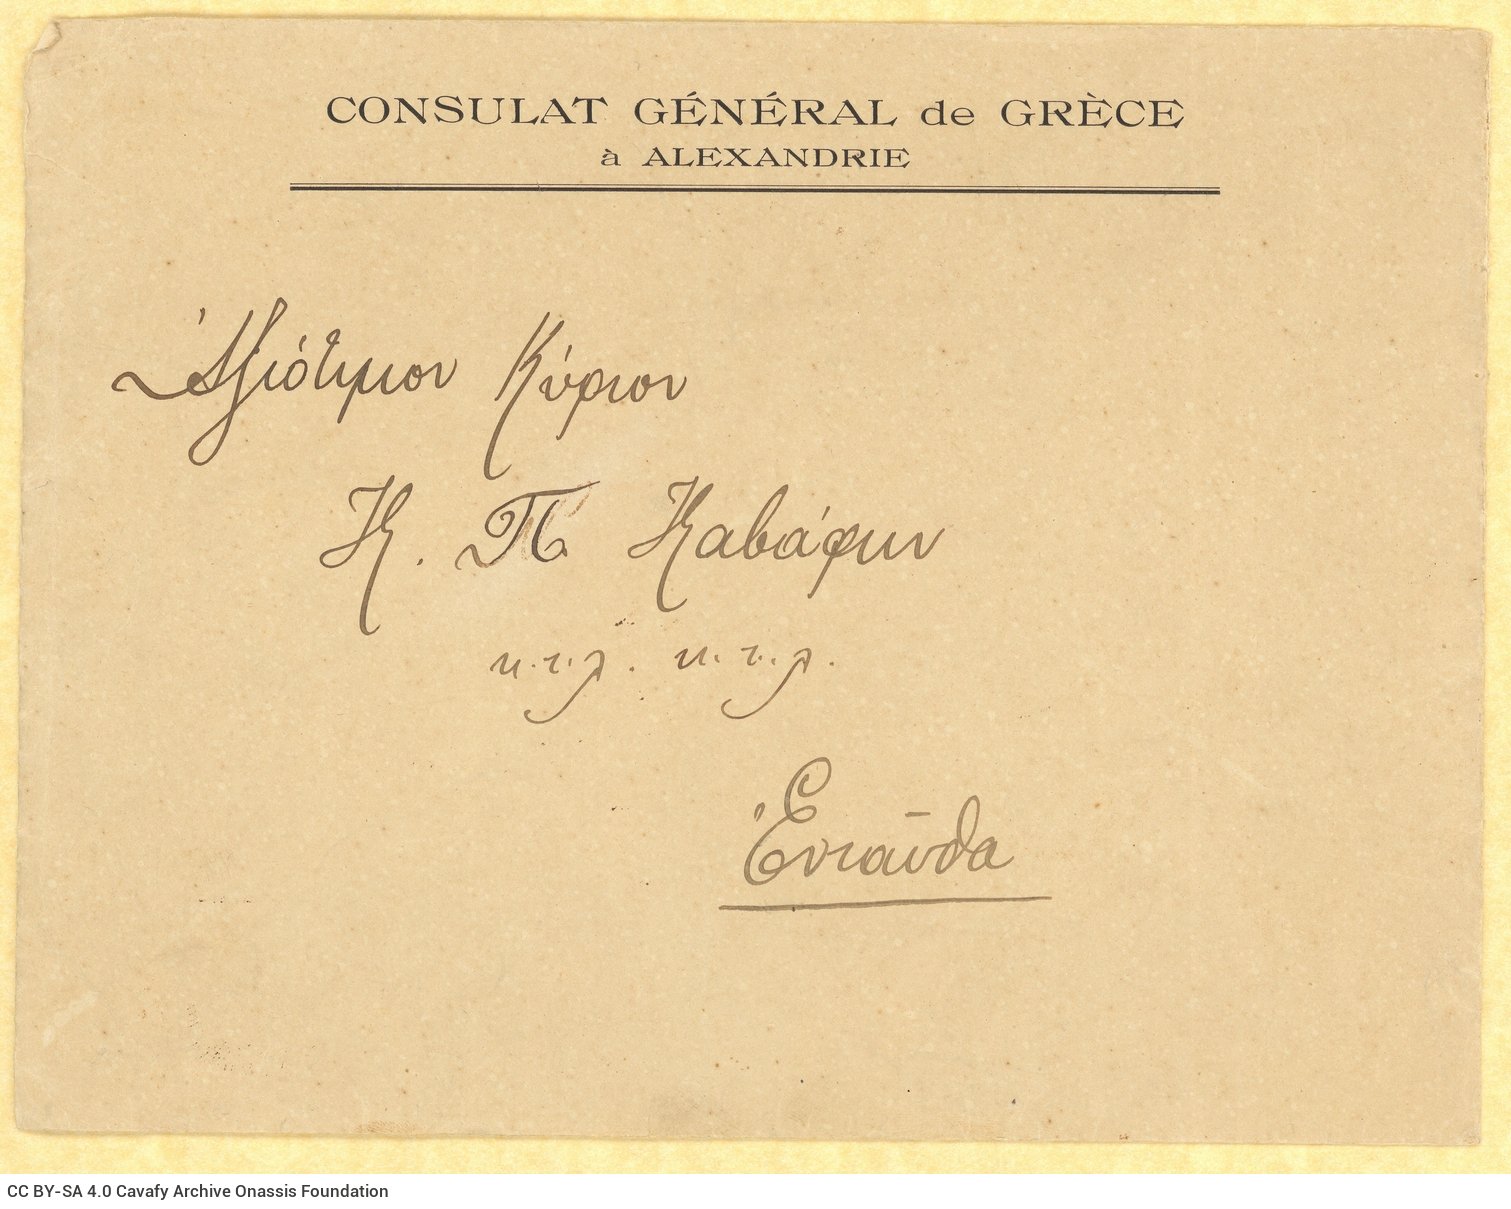 Envelope of the General Consulate of Greece ("Consulat Général de Grèce") in Alexandria, addressed to C. P. Cavafy. Pri